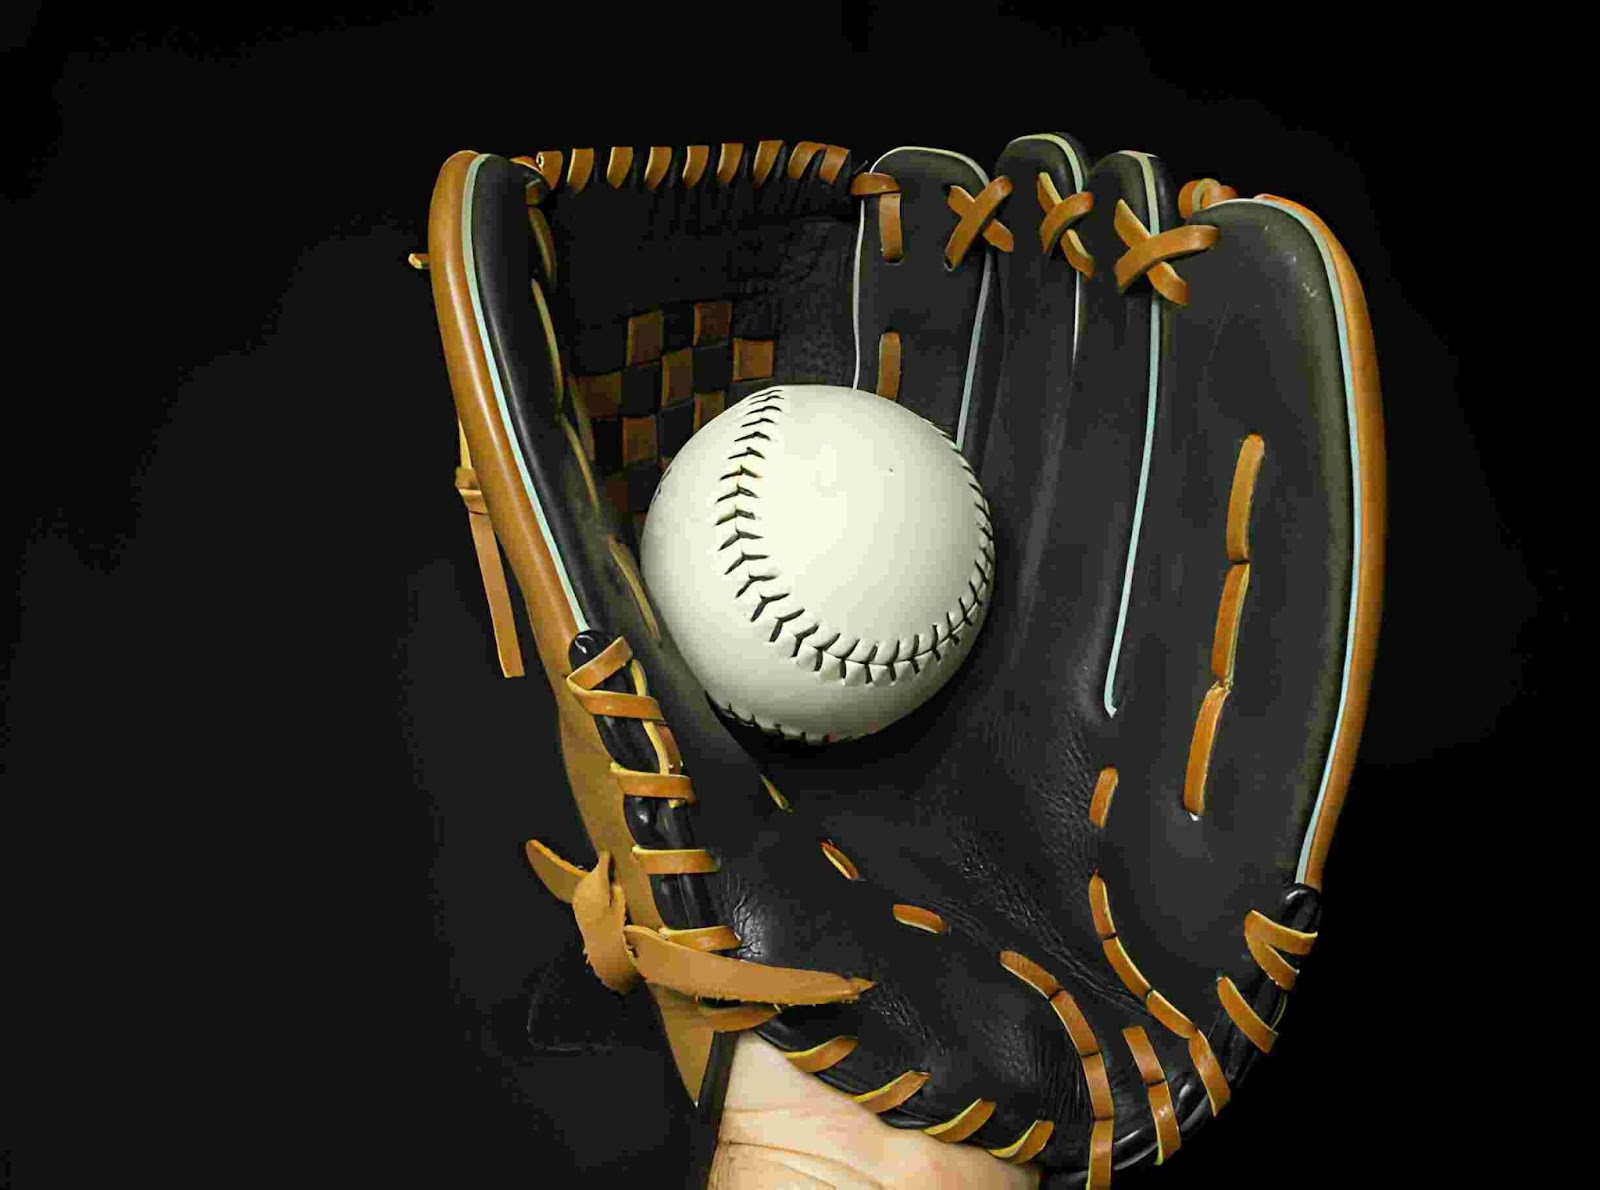 Slowpitch Softball Gloves